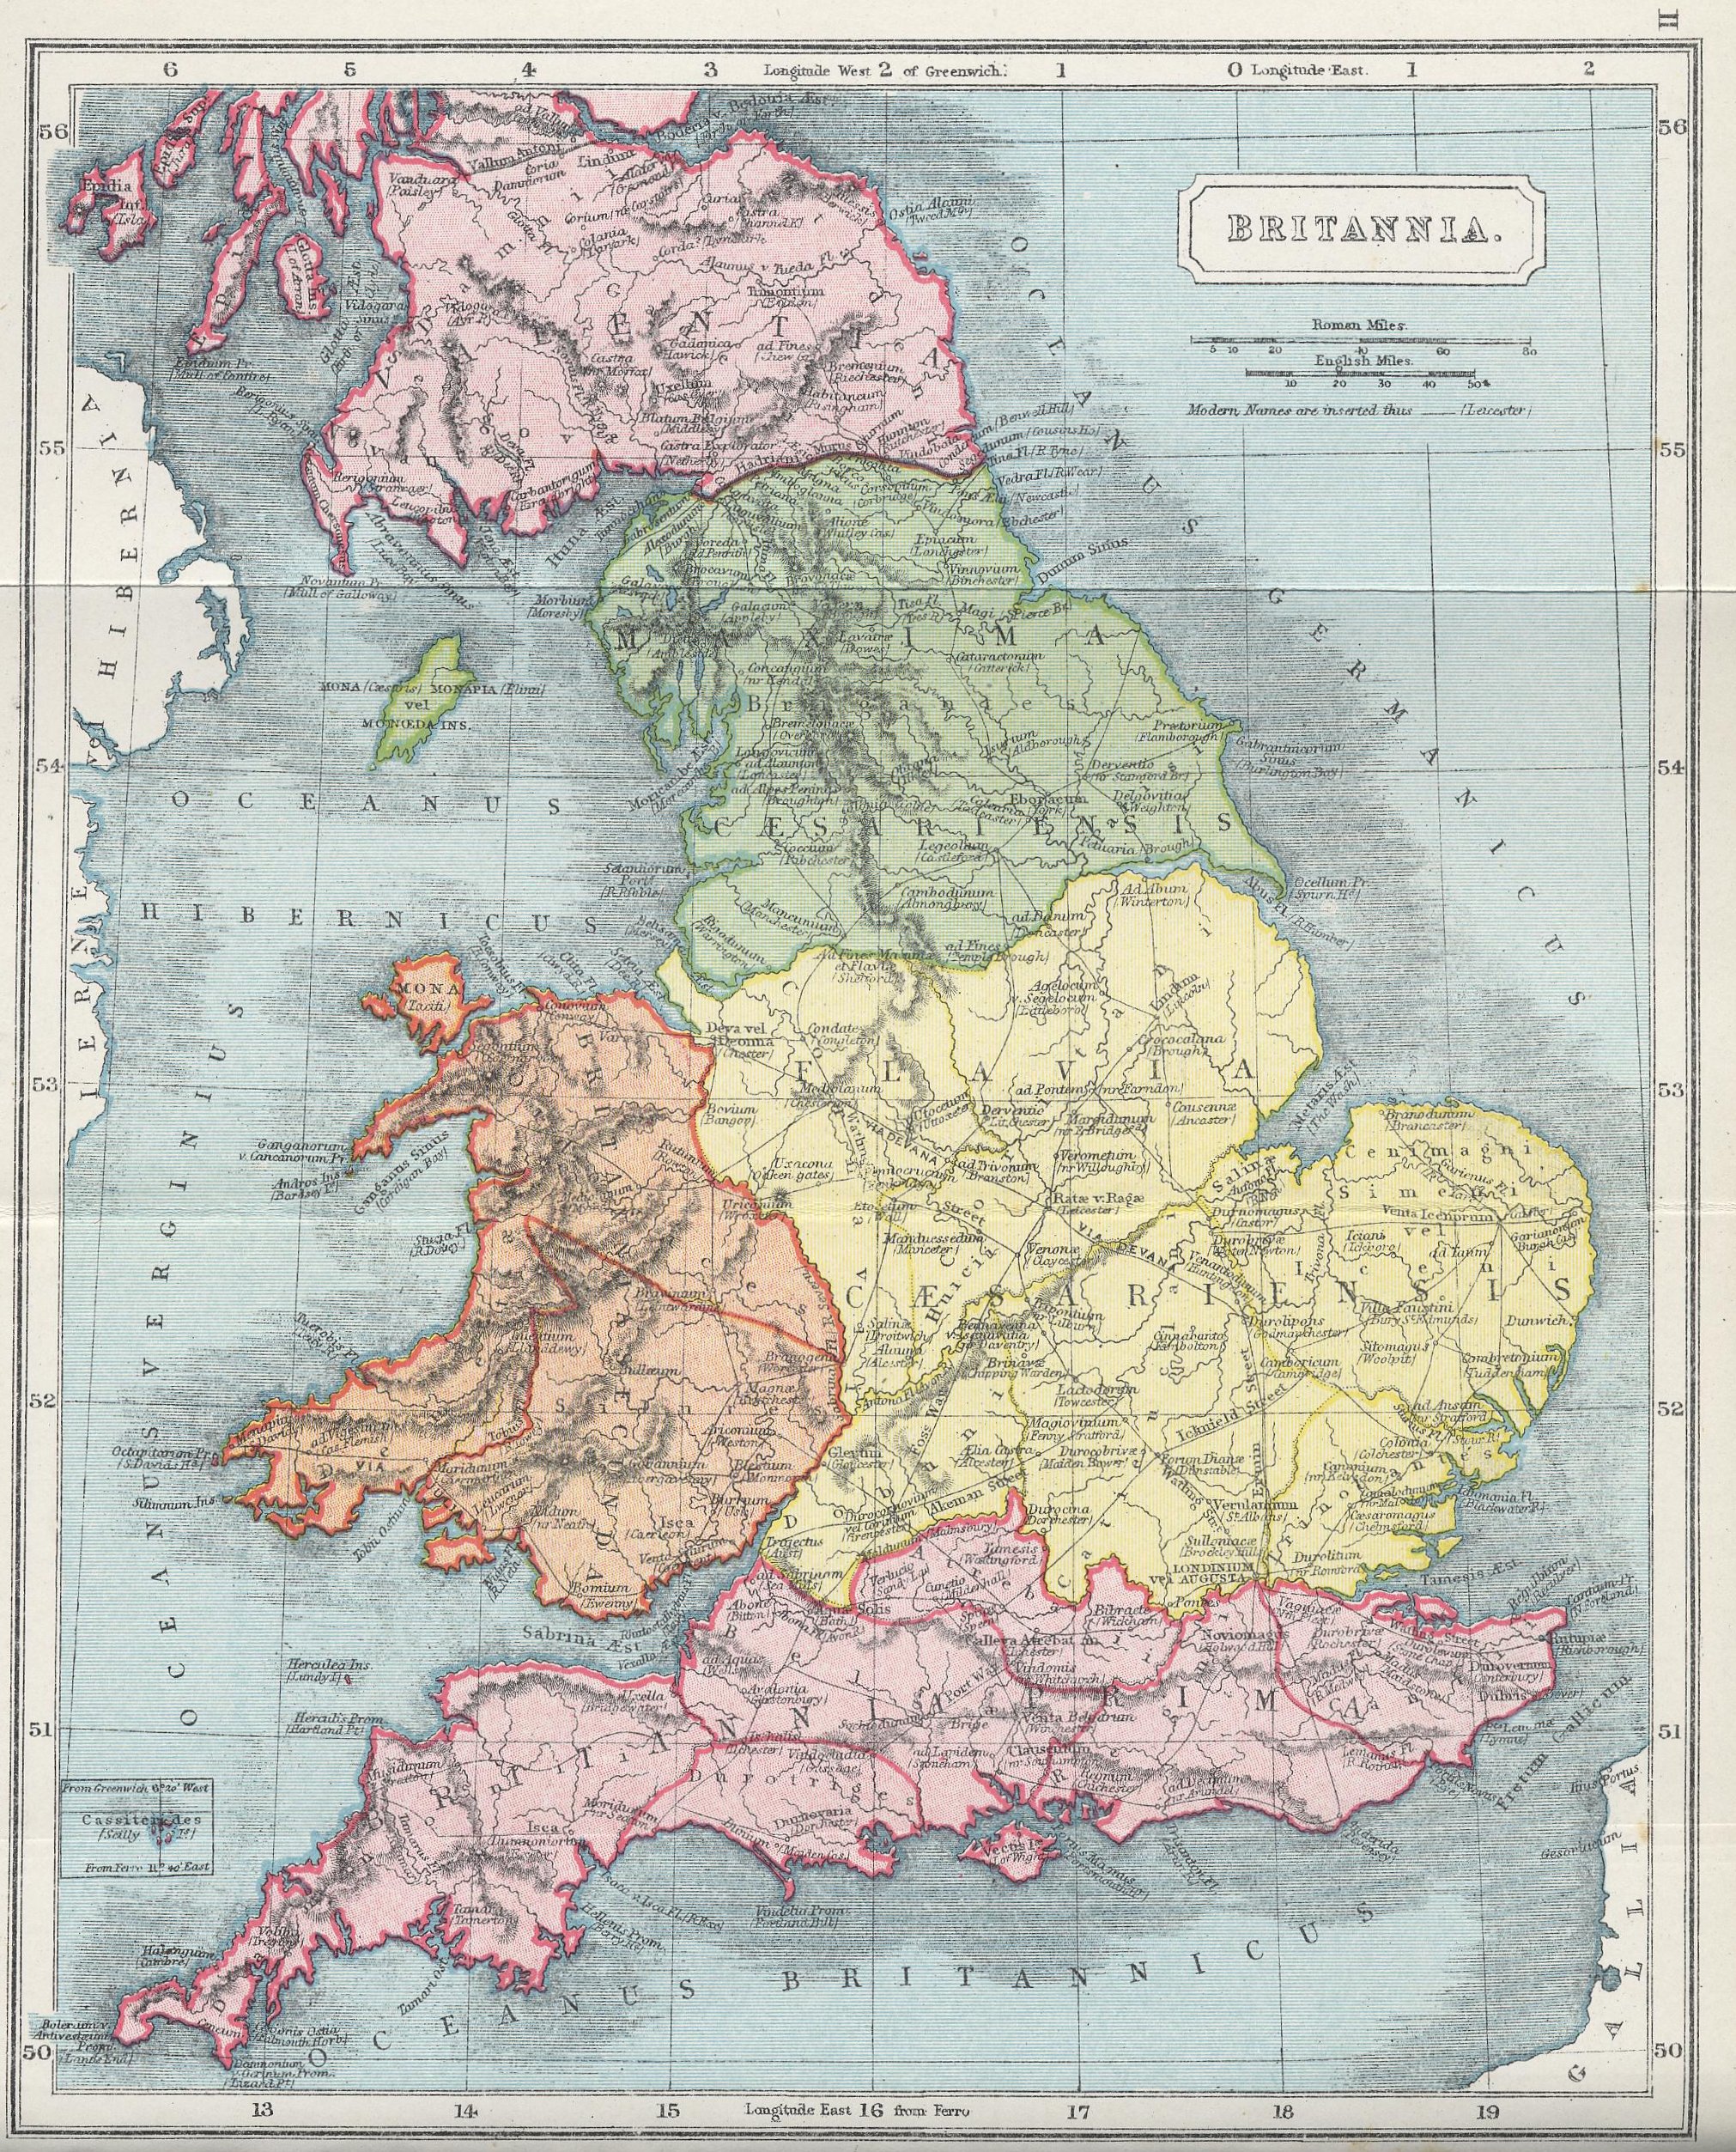 Map of Britain70 BC - AD 180